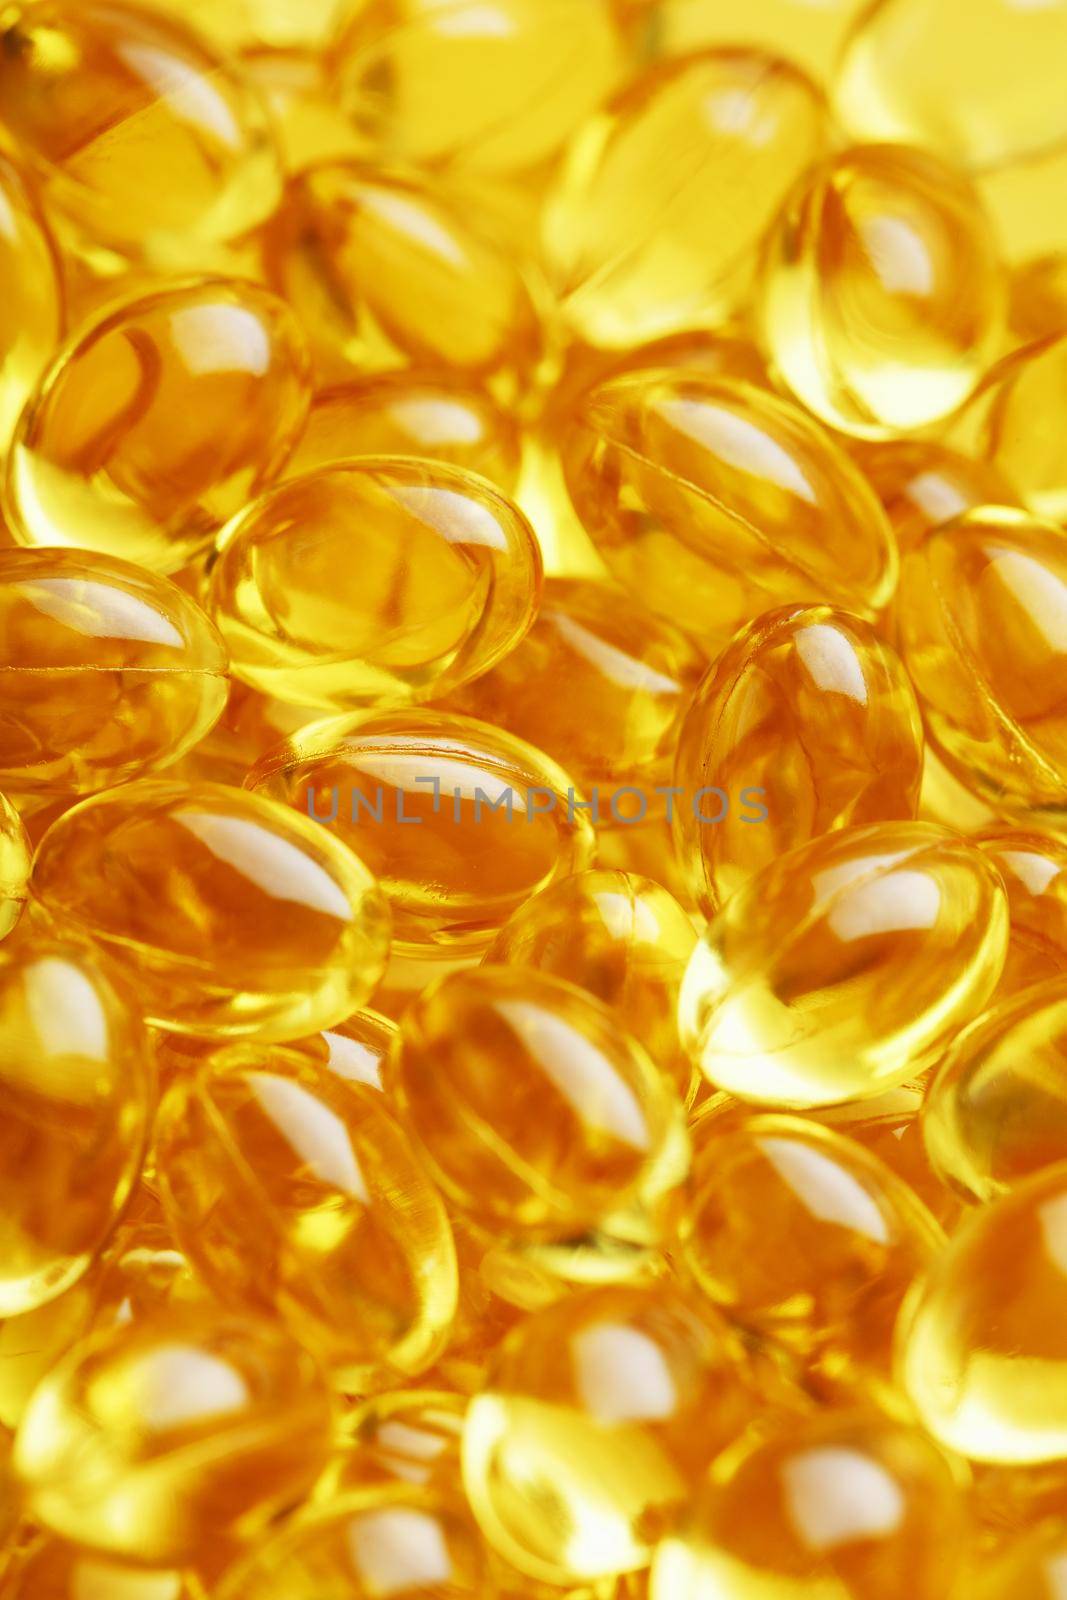 Golden Vitamin D3 Capsules close-up in full screen by AlexGrec